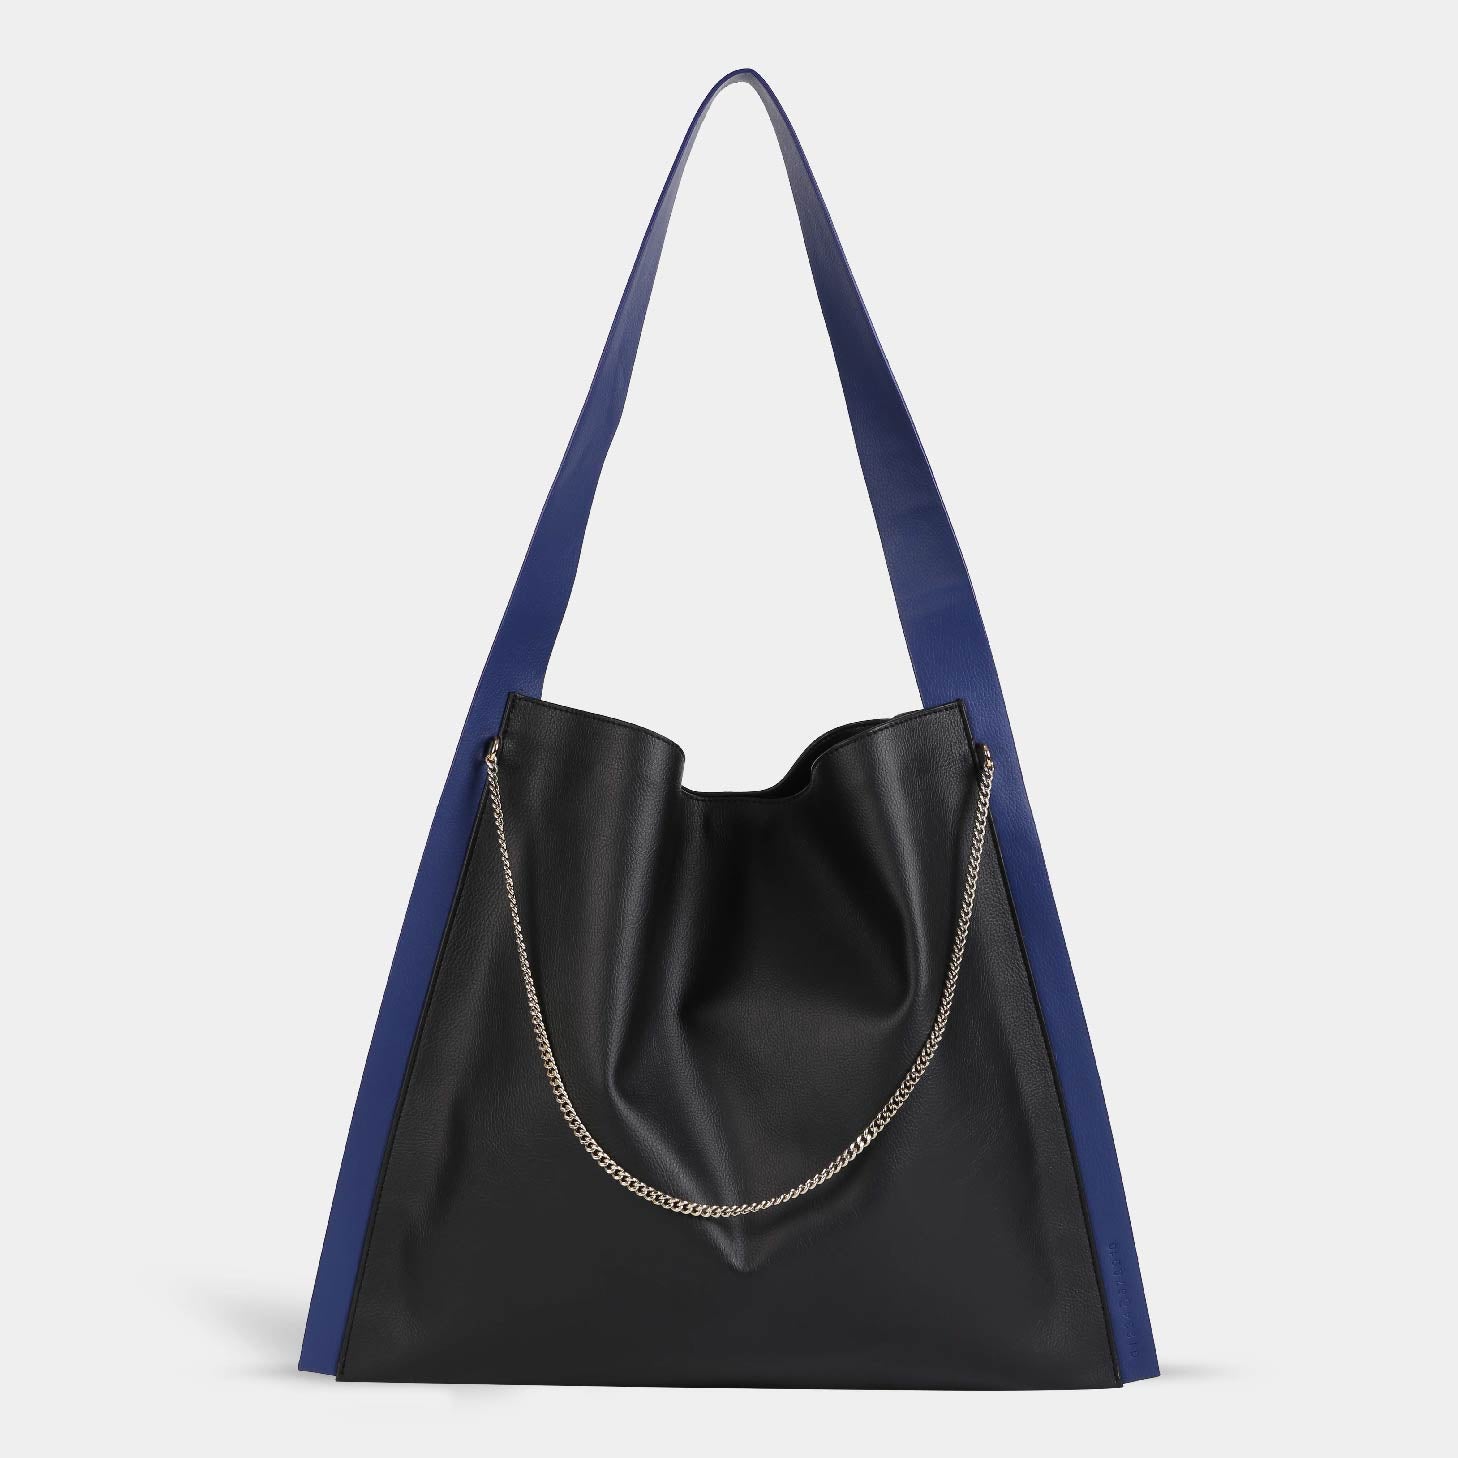 PAPER TOTE handbag in black with blue strap